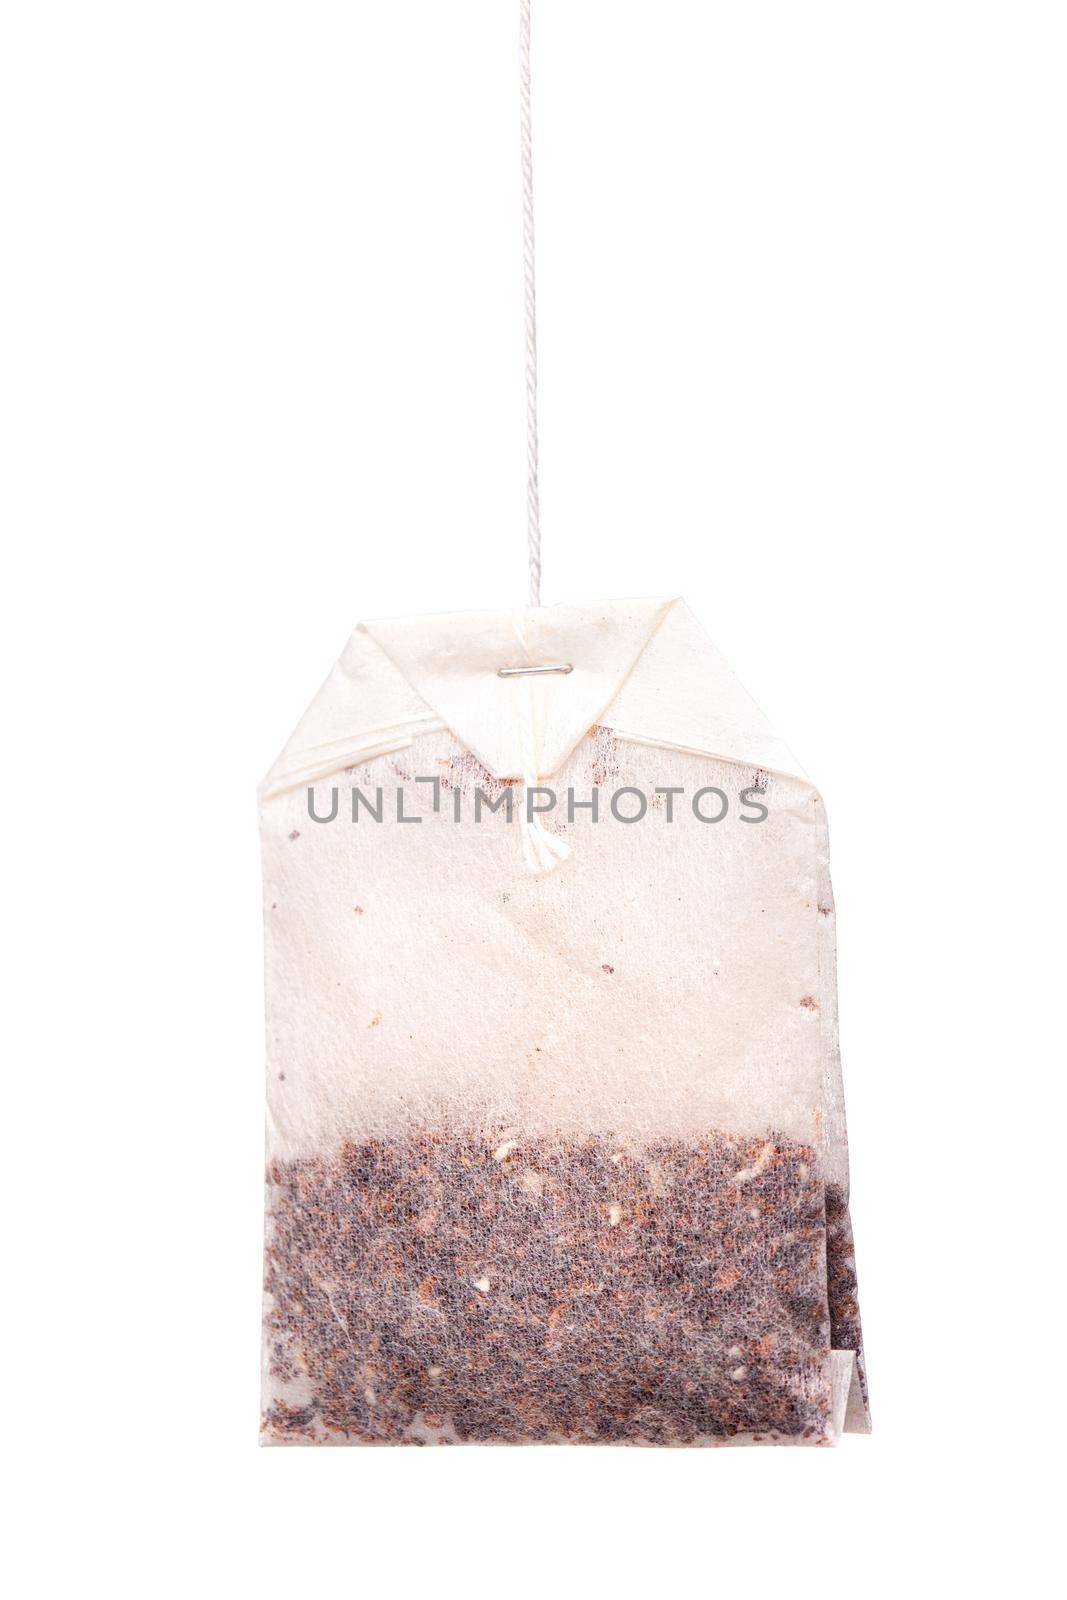 Herbal tea in paper bag. Teabag hanging against white background by kokimk